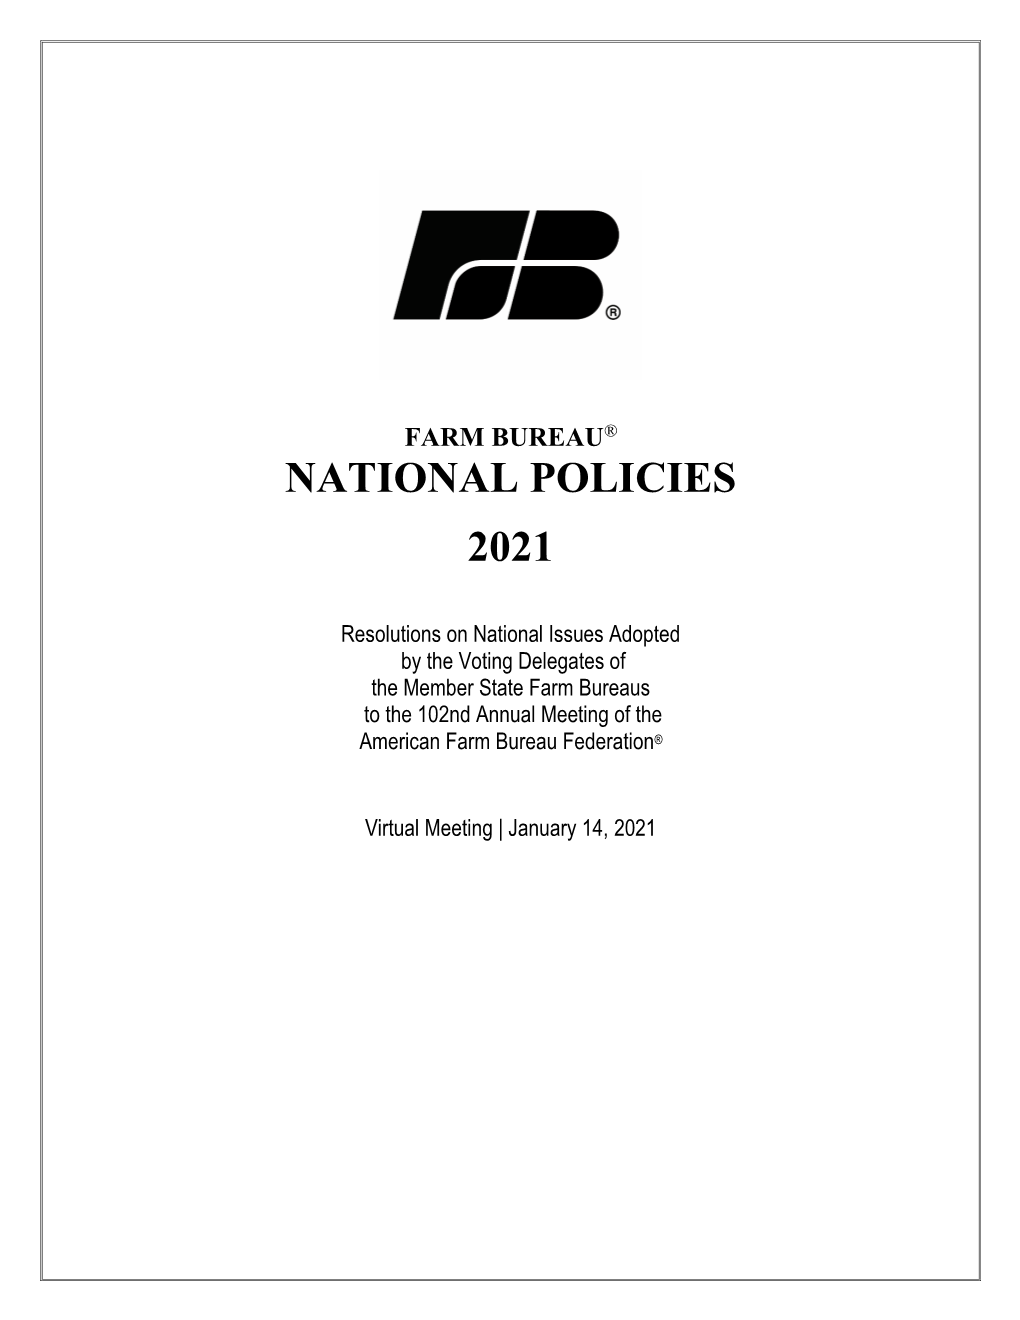 National Policies 2021